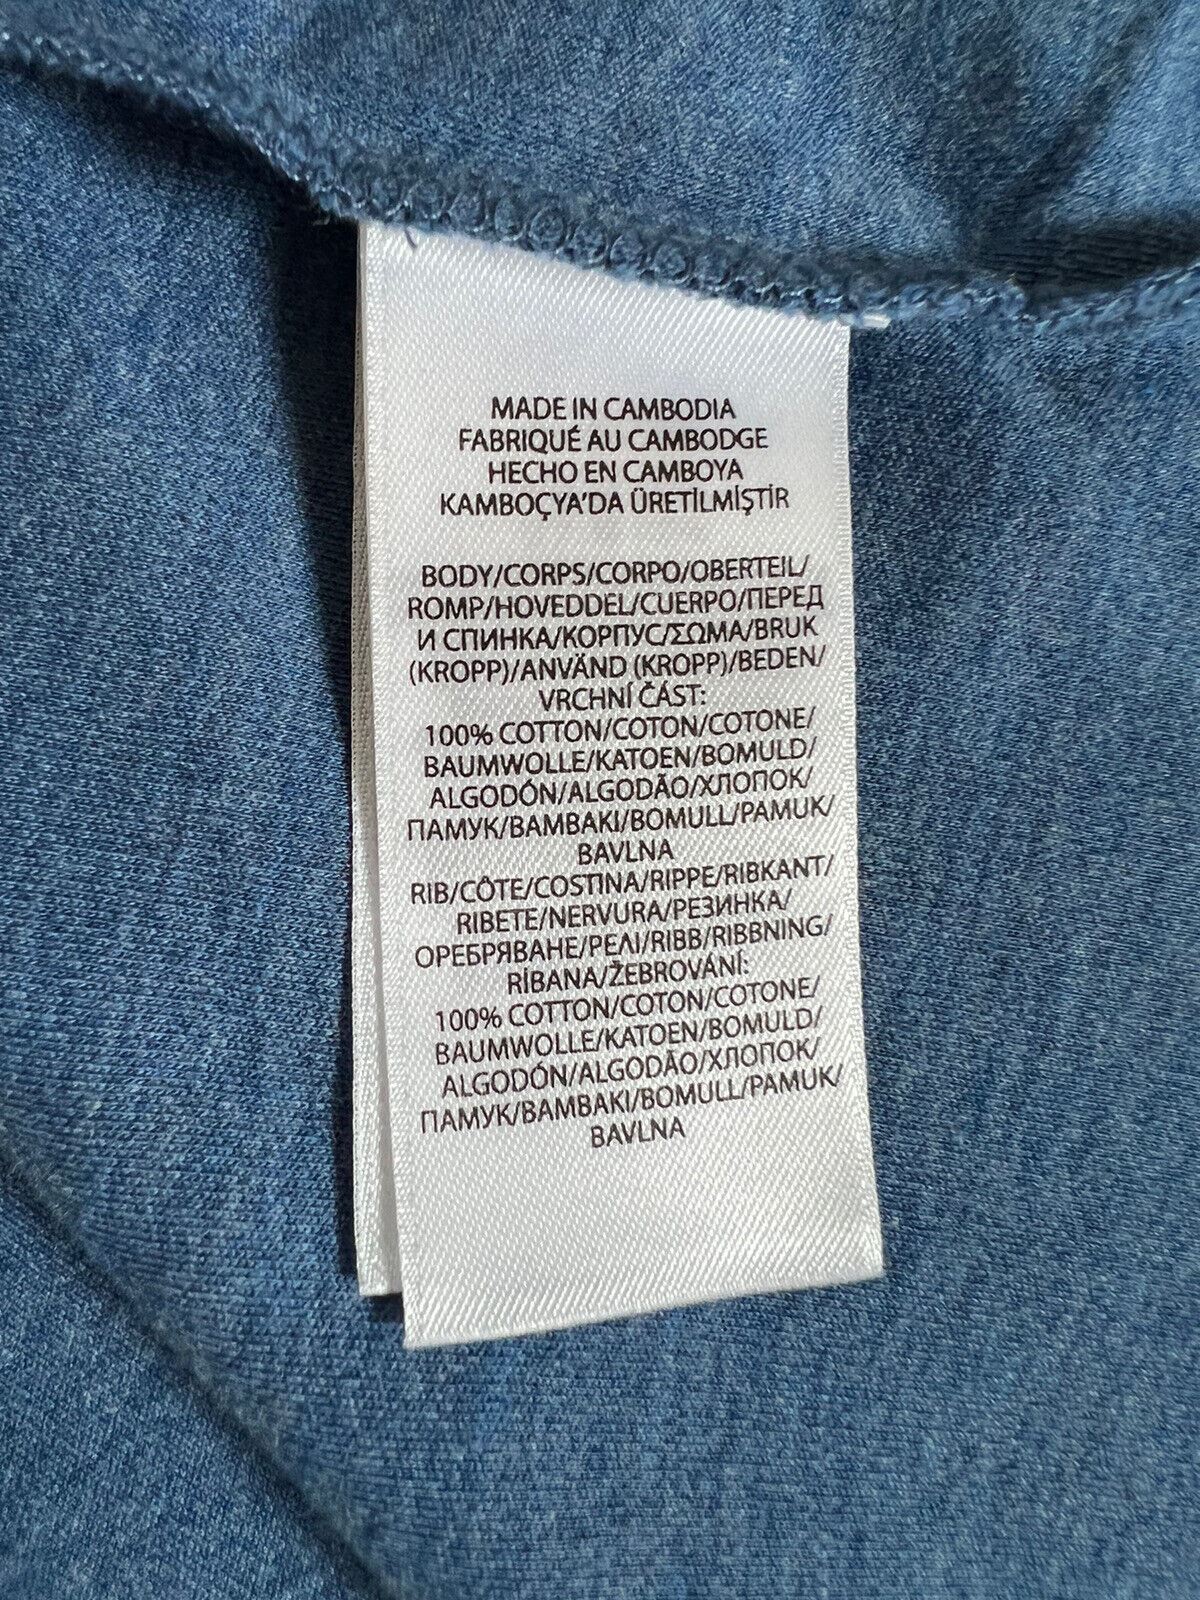 NWT 55 $ Polo Ralph Lauren Custom Slim Fit T-Shirt Medium in Königsblau